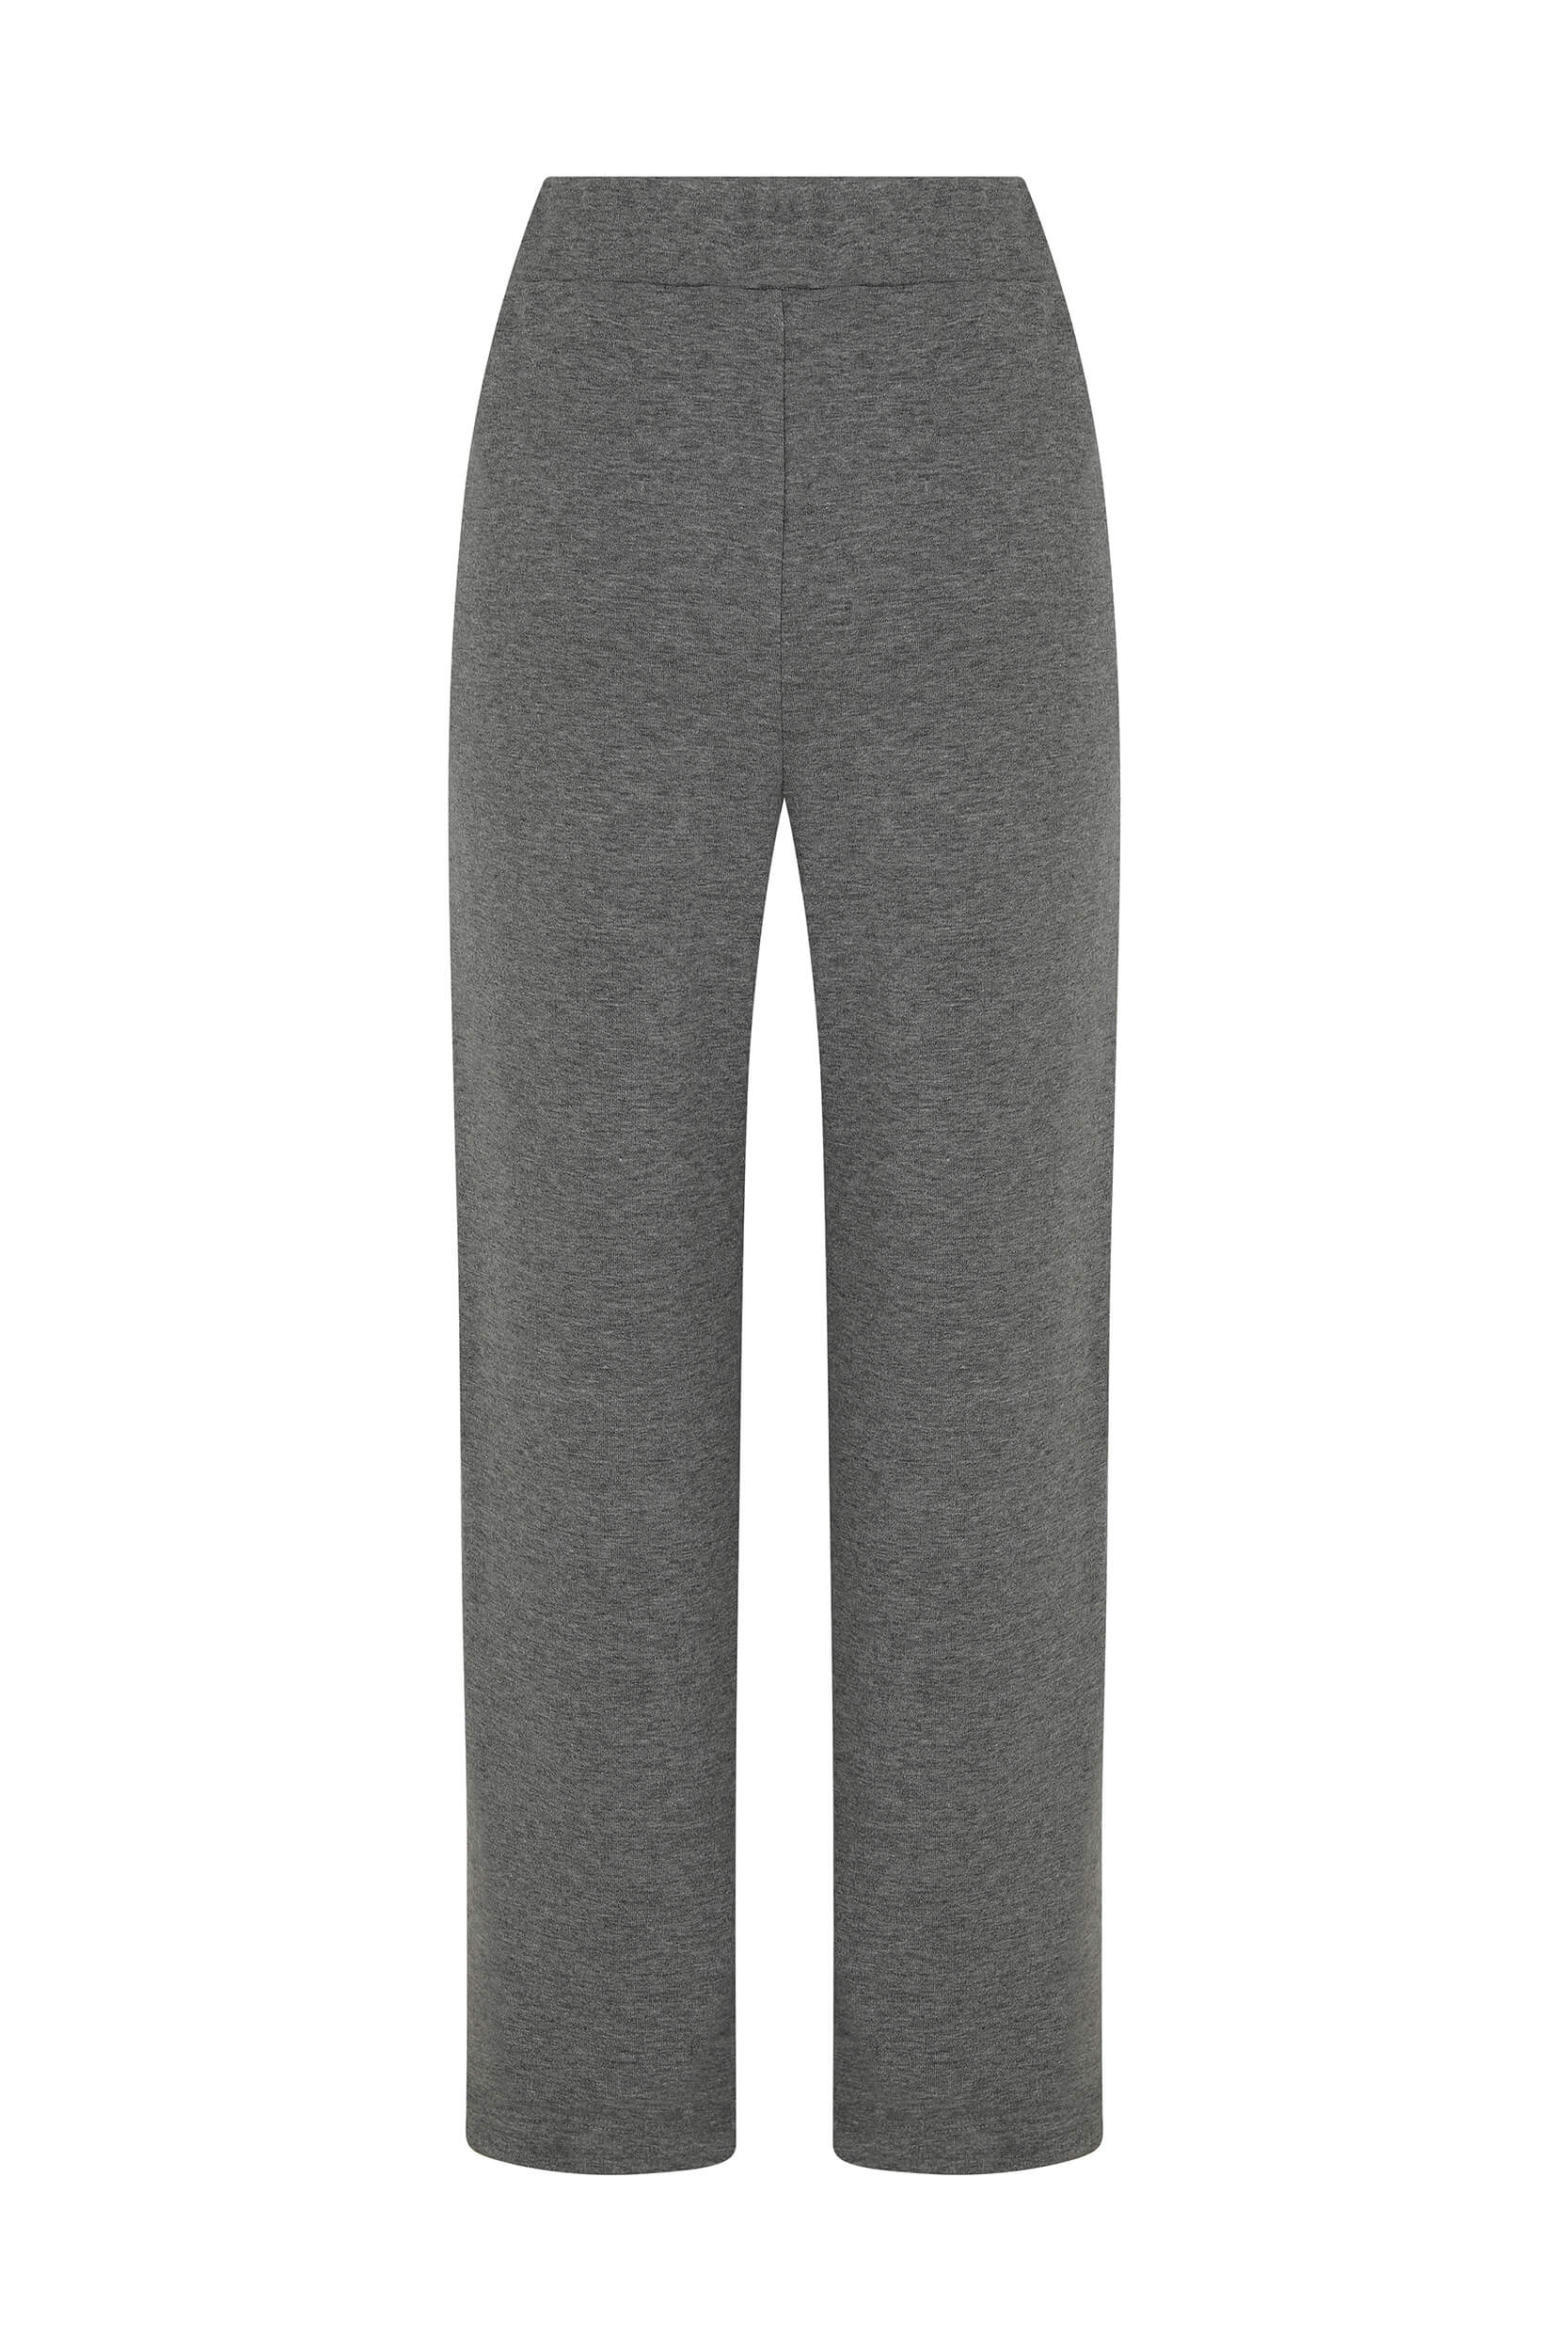 Grey Embroidered Sweatpants - Loungewear